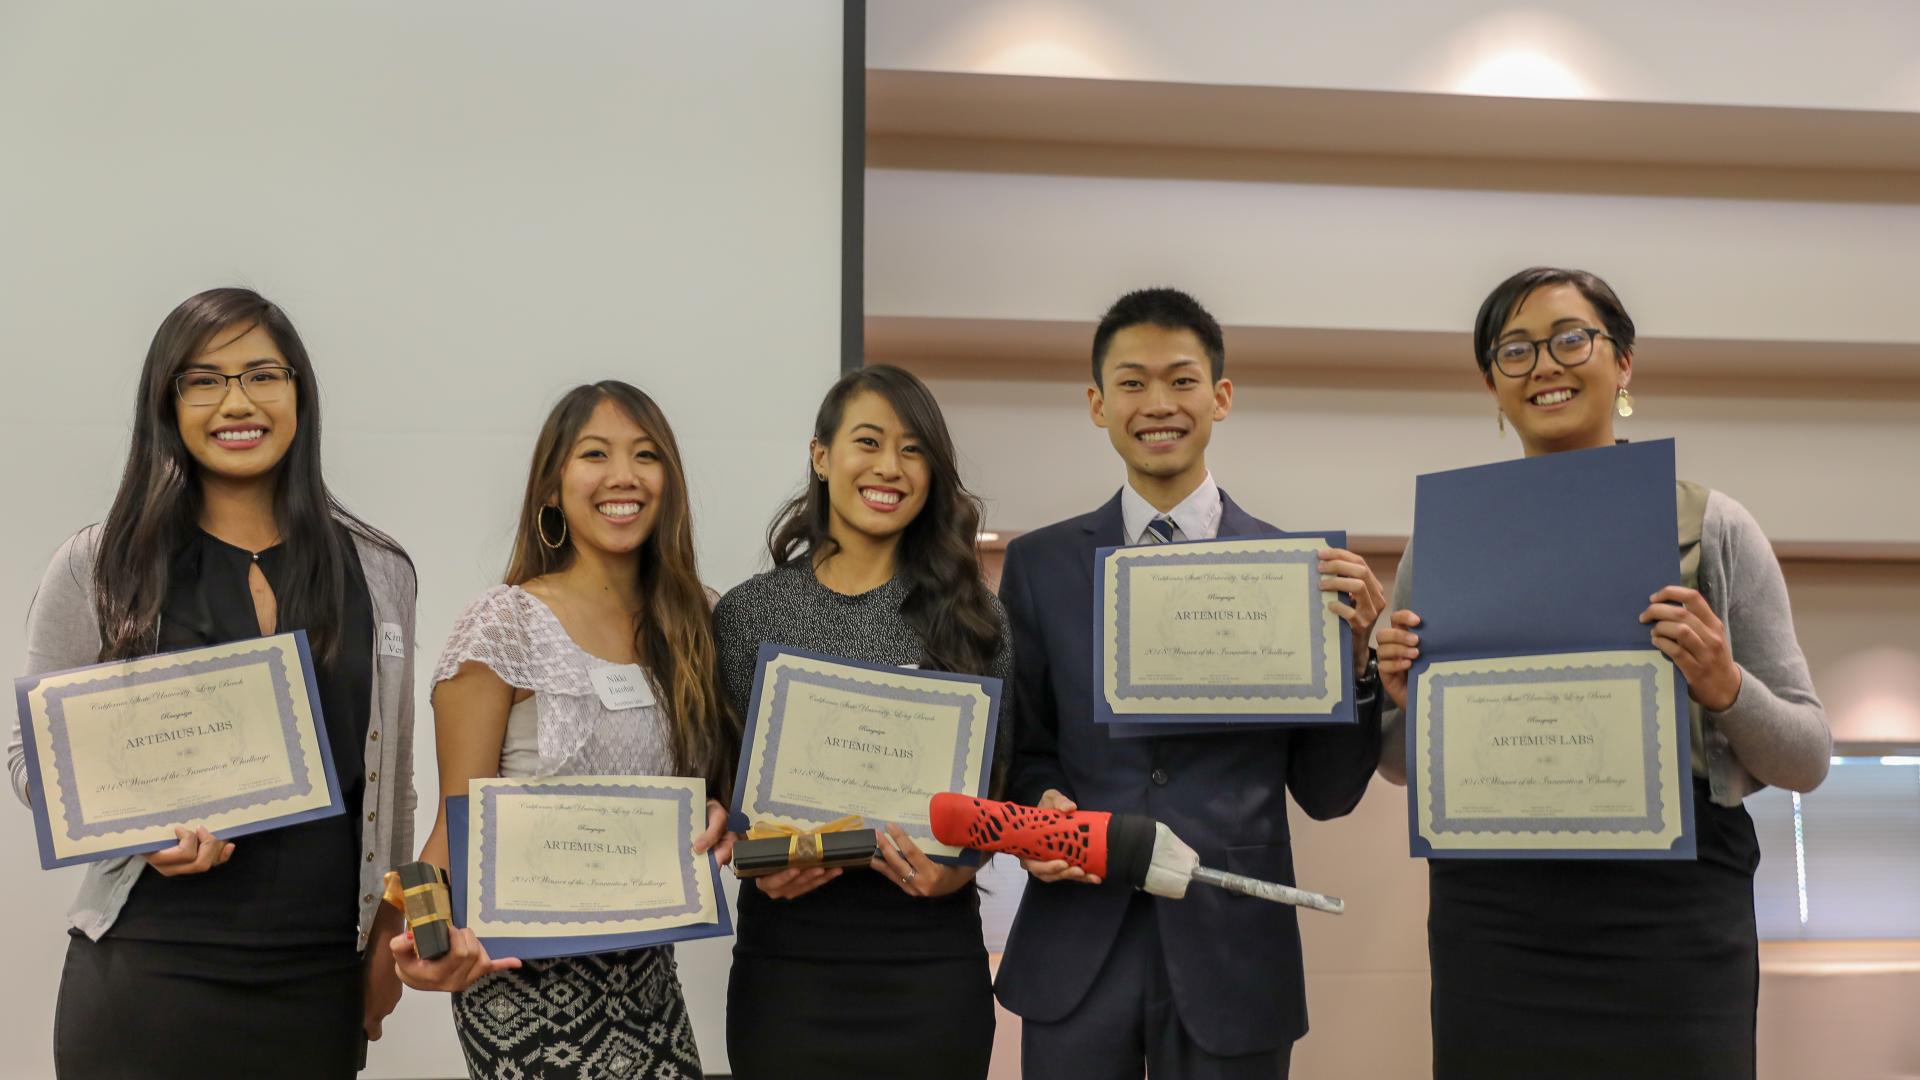 CSULB Innovation Challenge Award Ceremony - Artemus Labs Winners